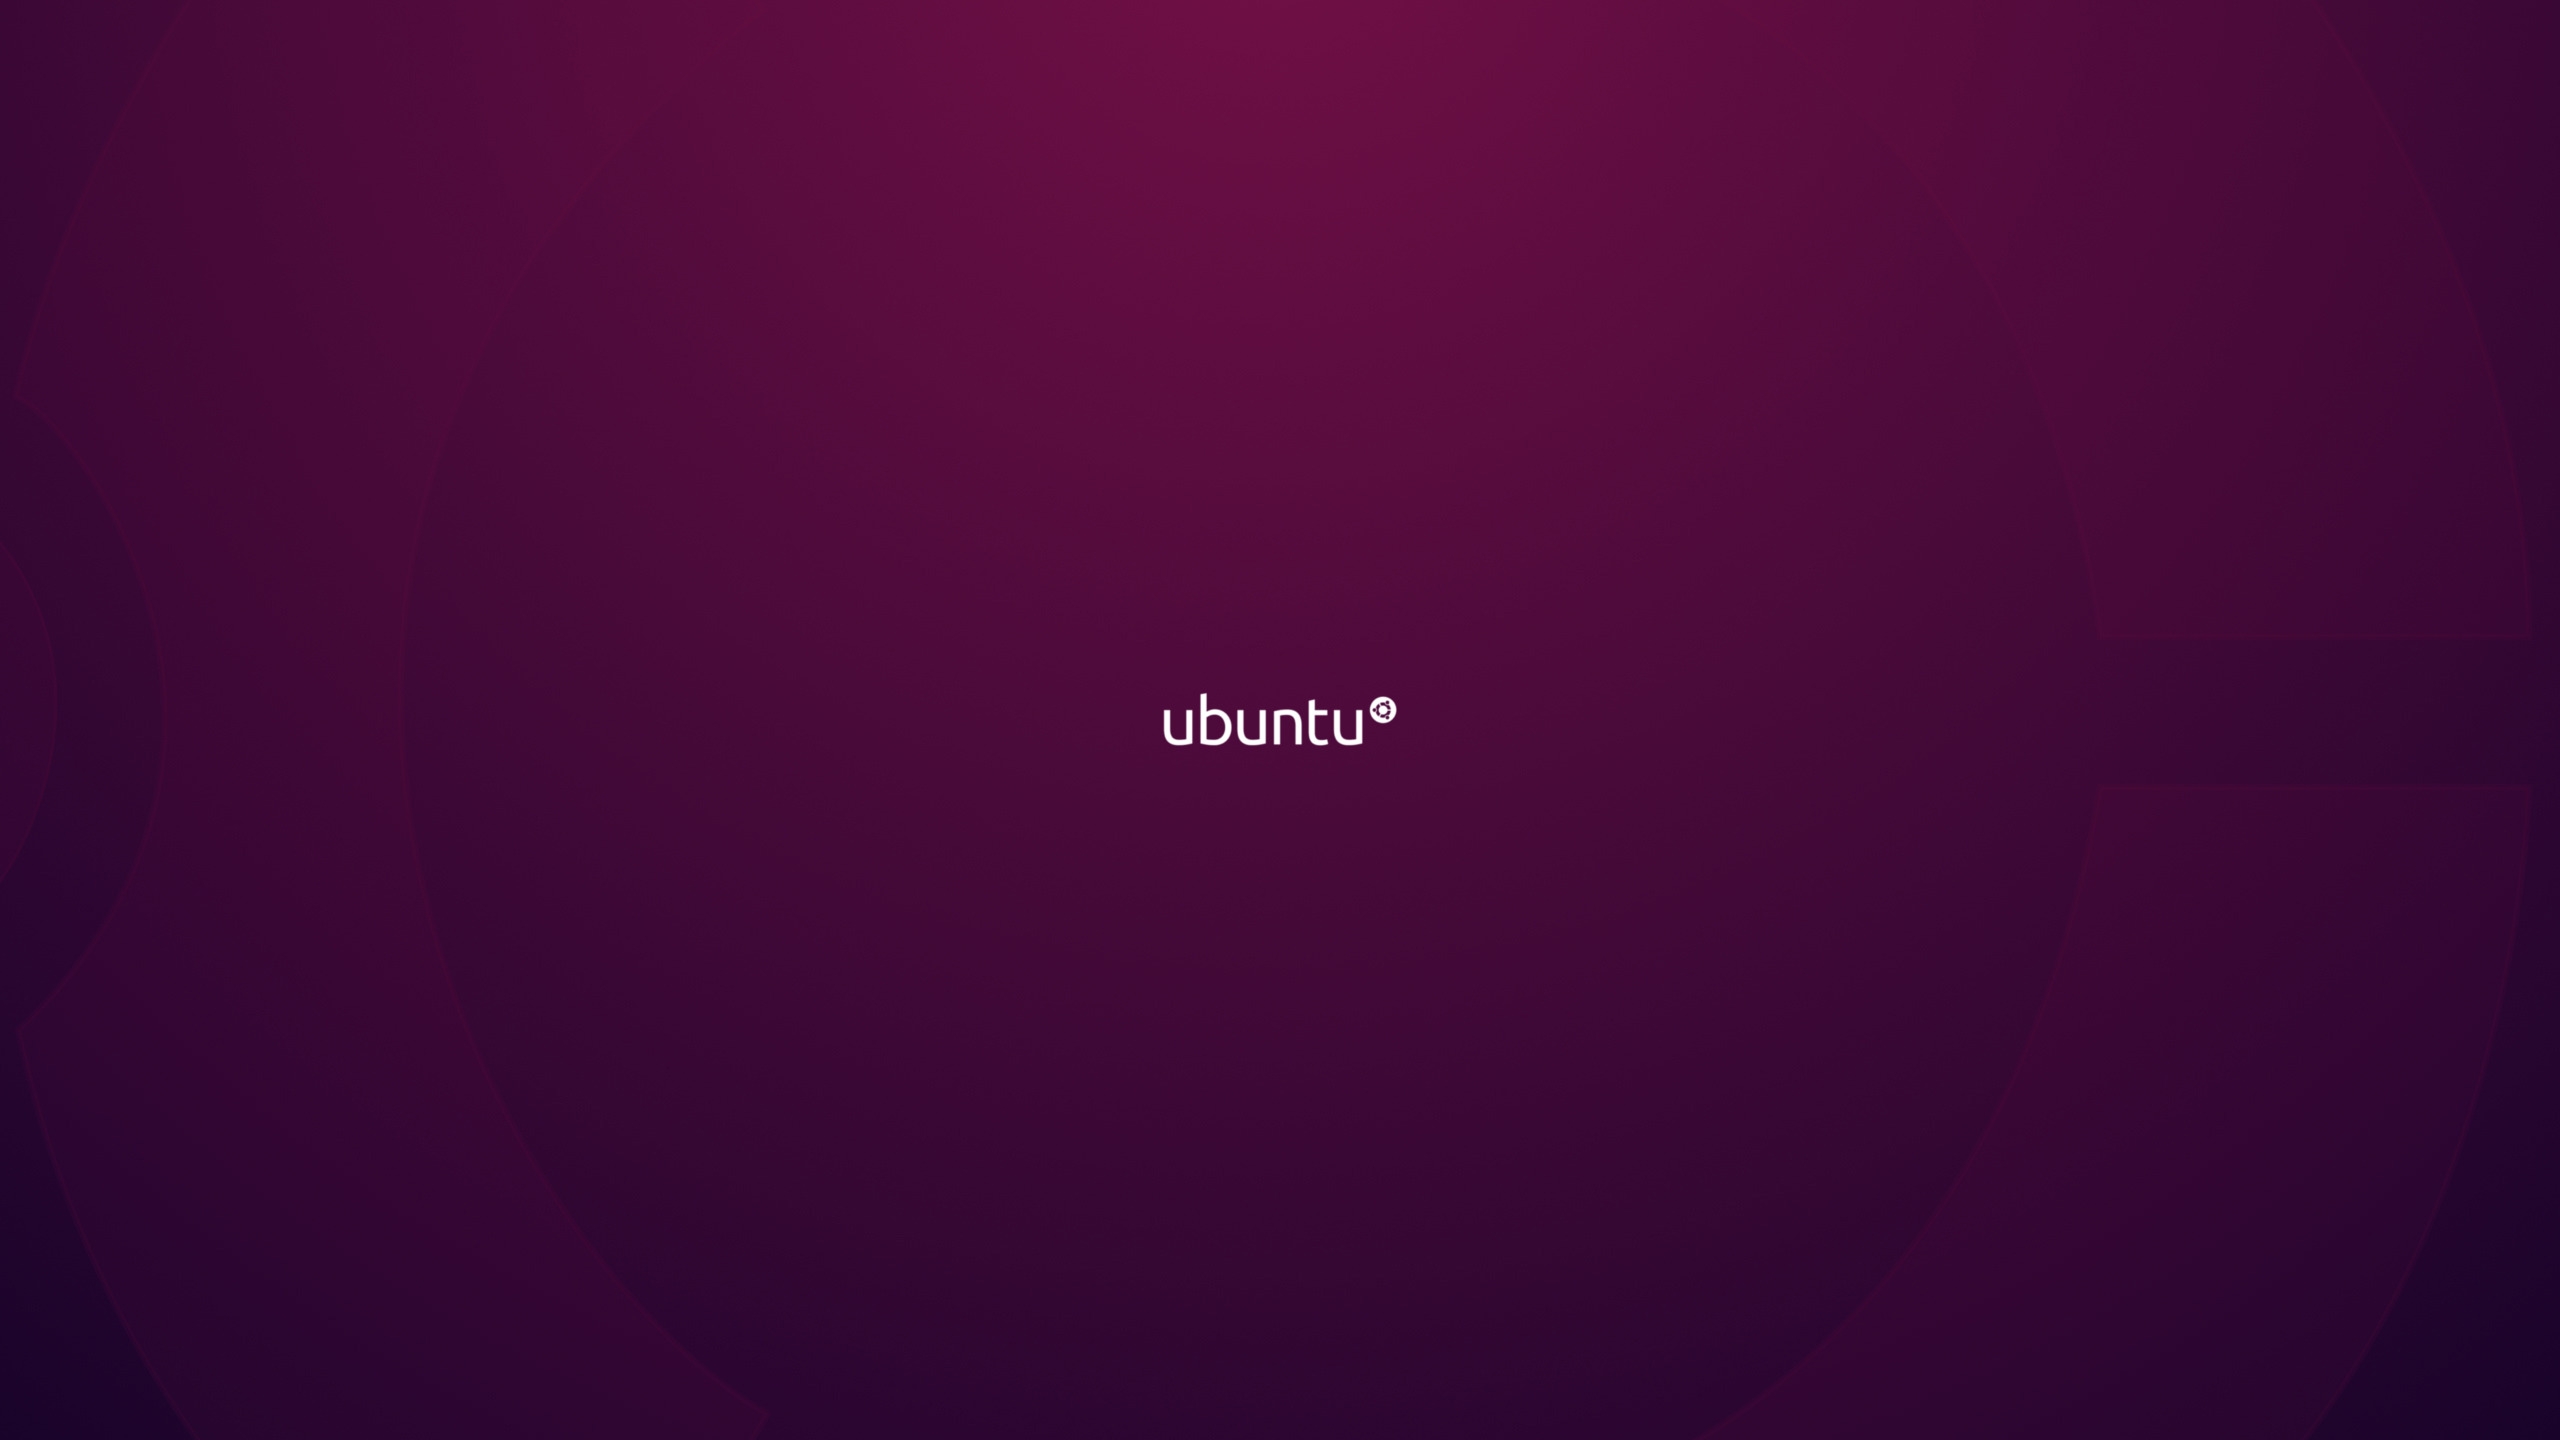 Ubuntu Purple for 2560x1440 HDTV resolution